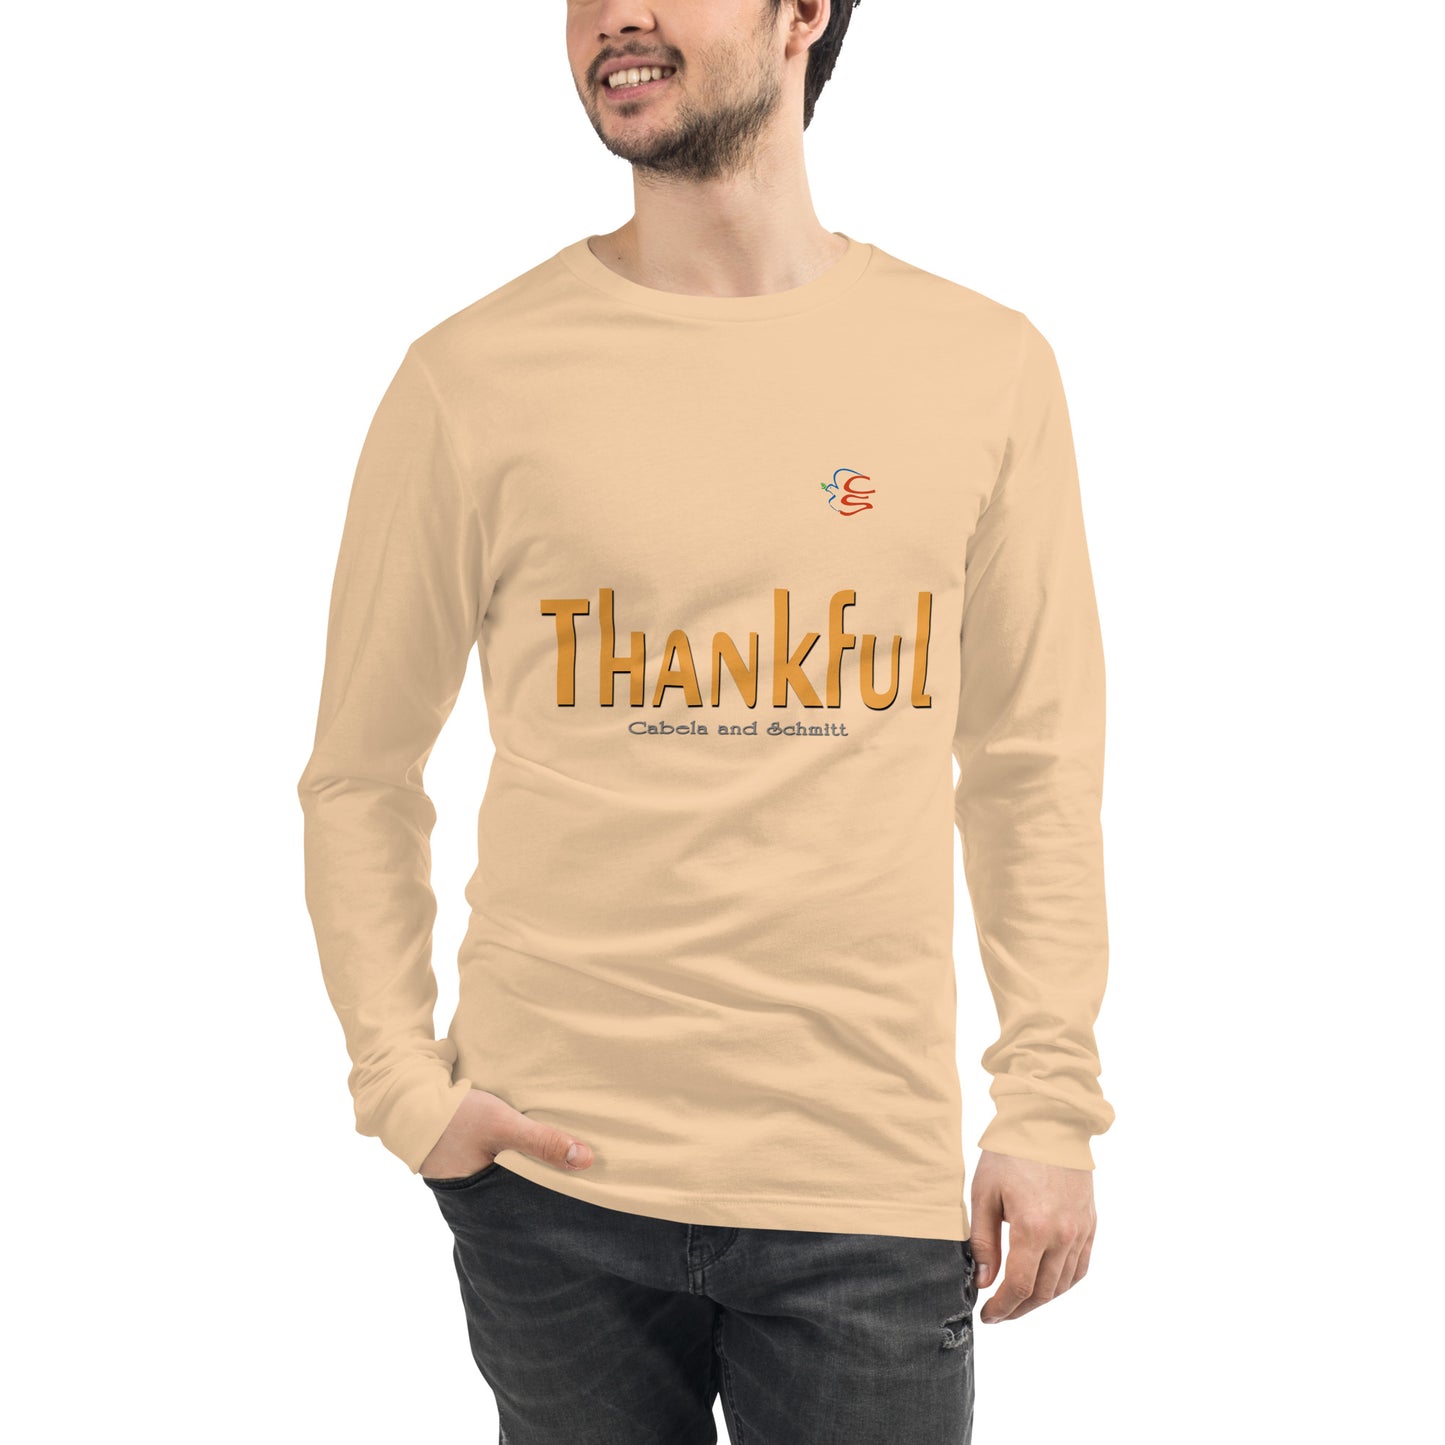 Unisex Long Sleeve Tee "Thankful"